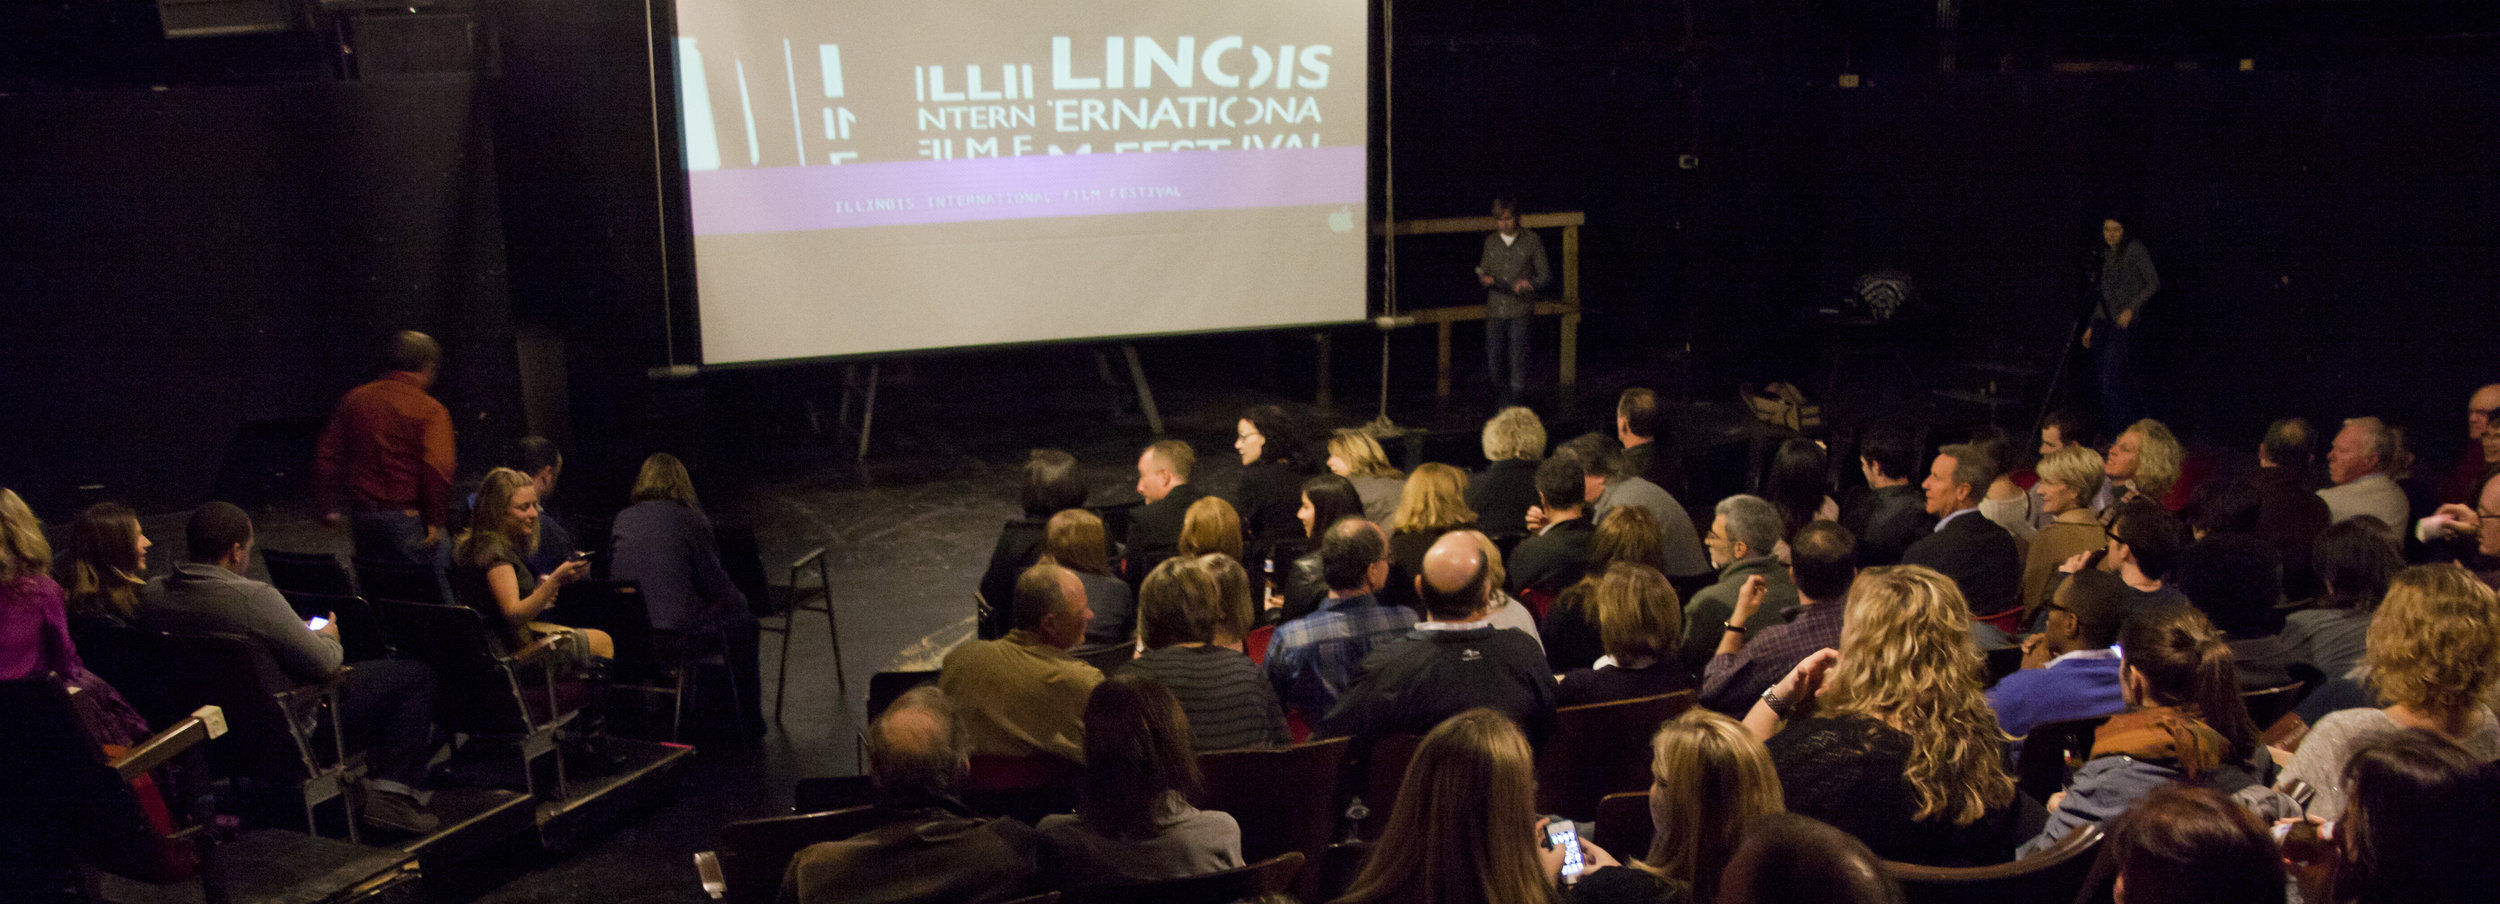 Screening at Illinois International Film Festival